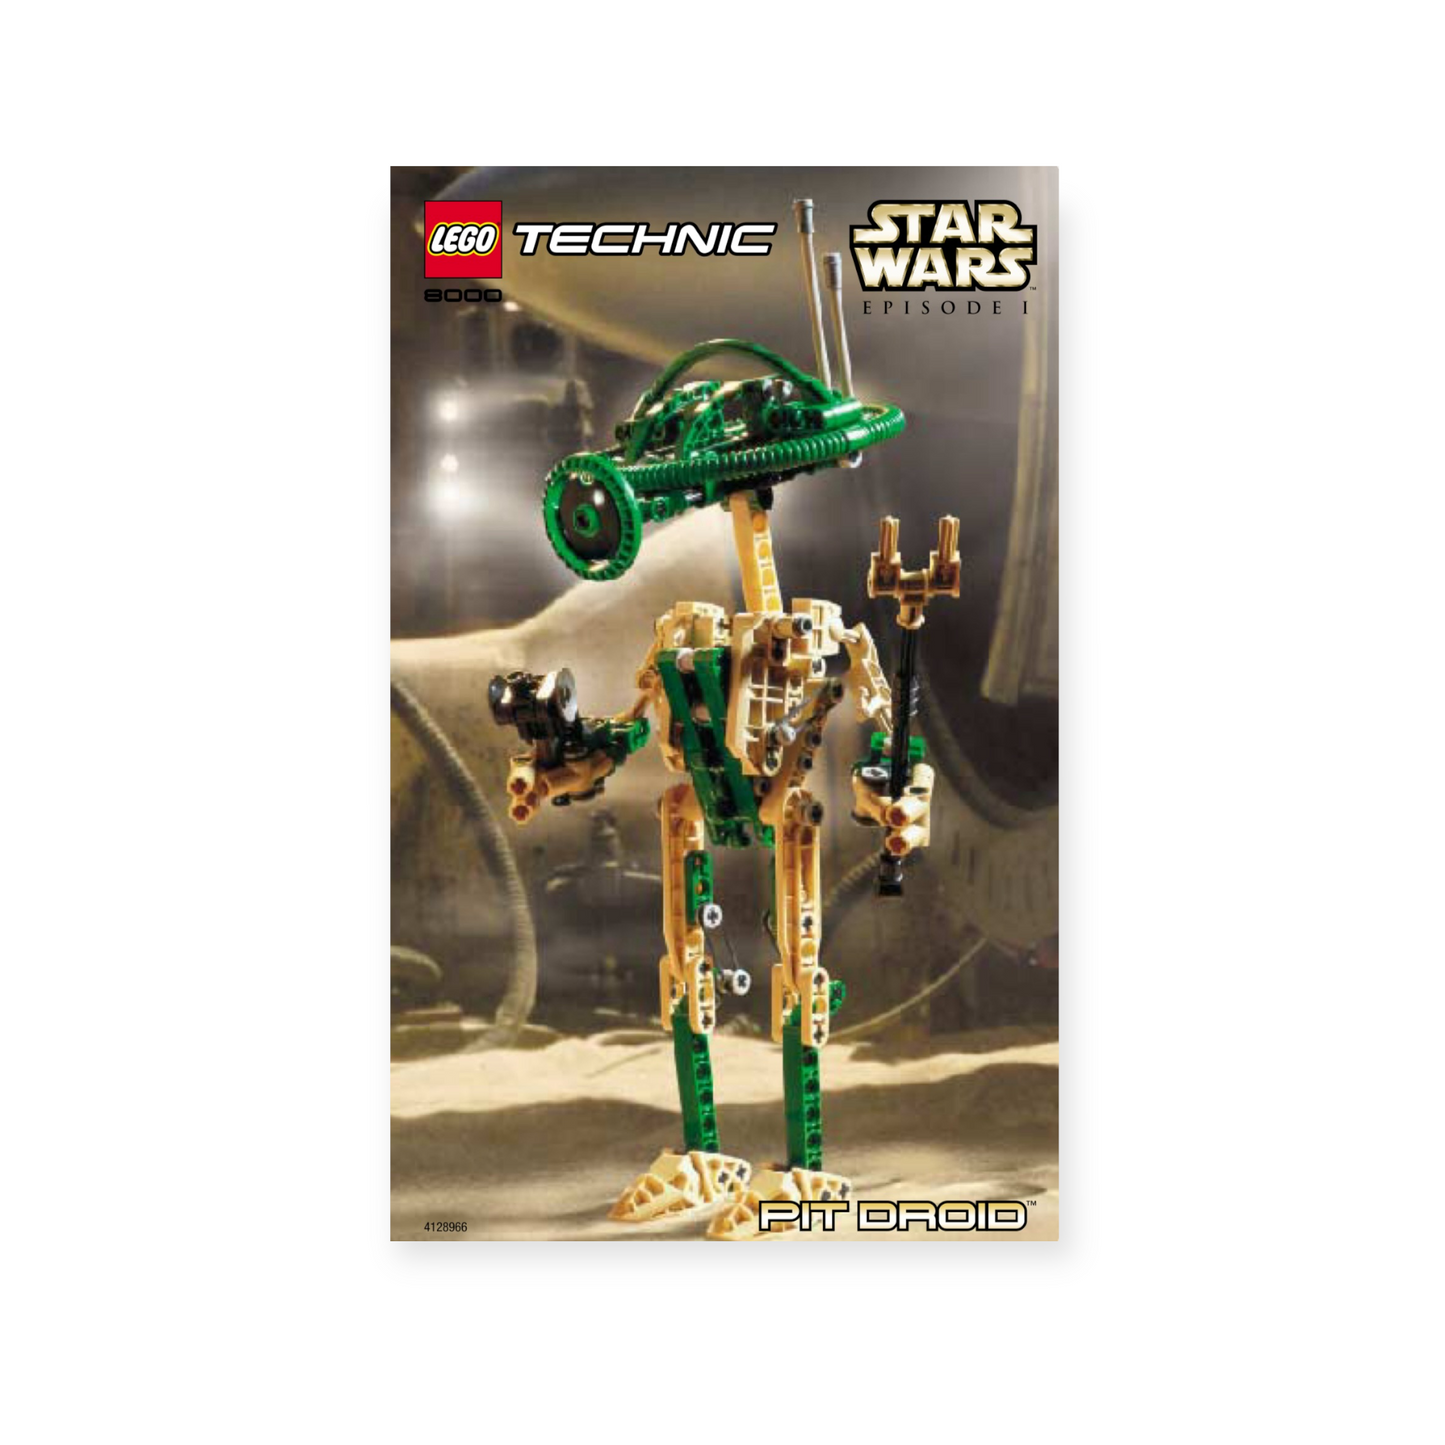 LEGO Technic Star Wars 8000 Pit Droid